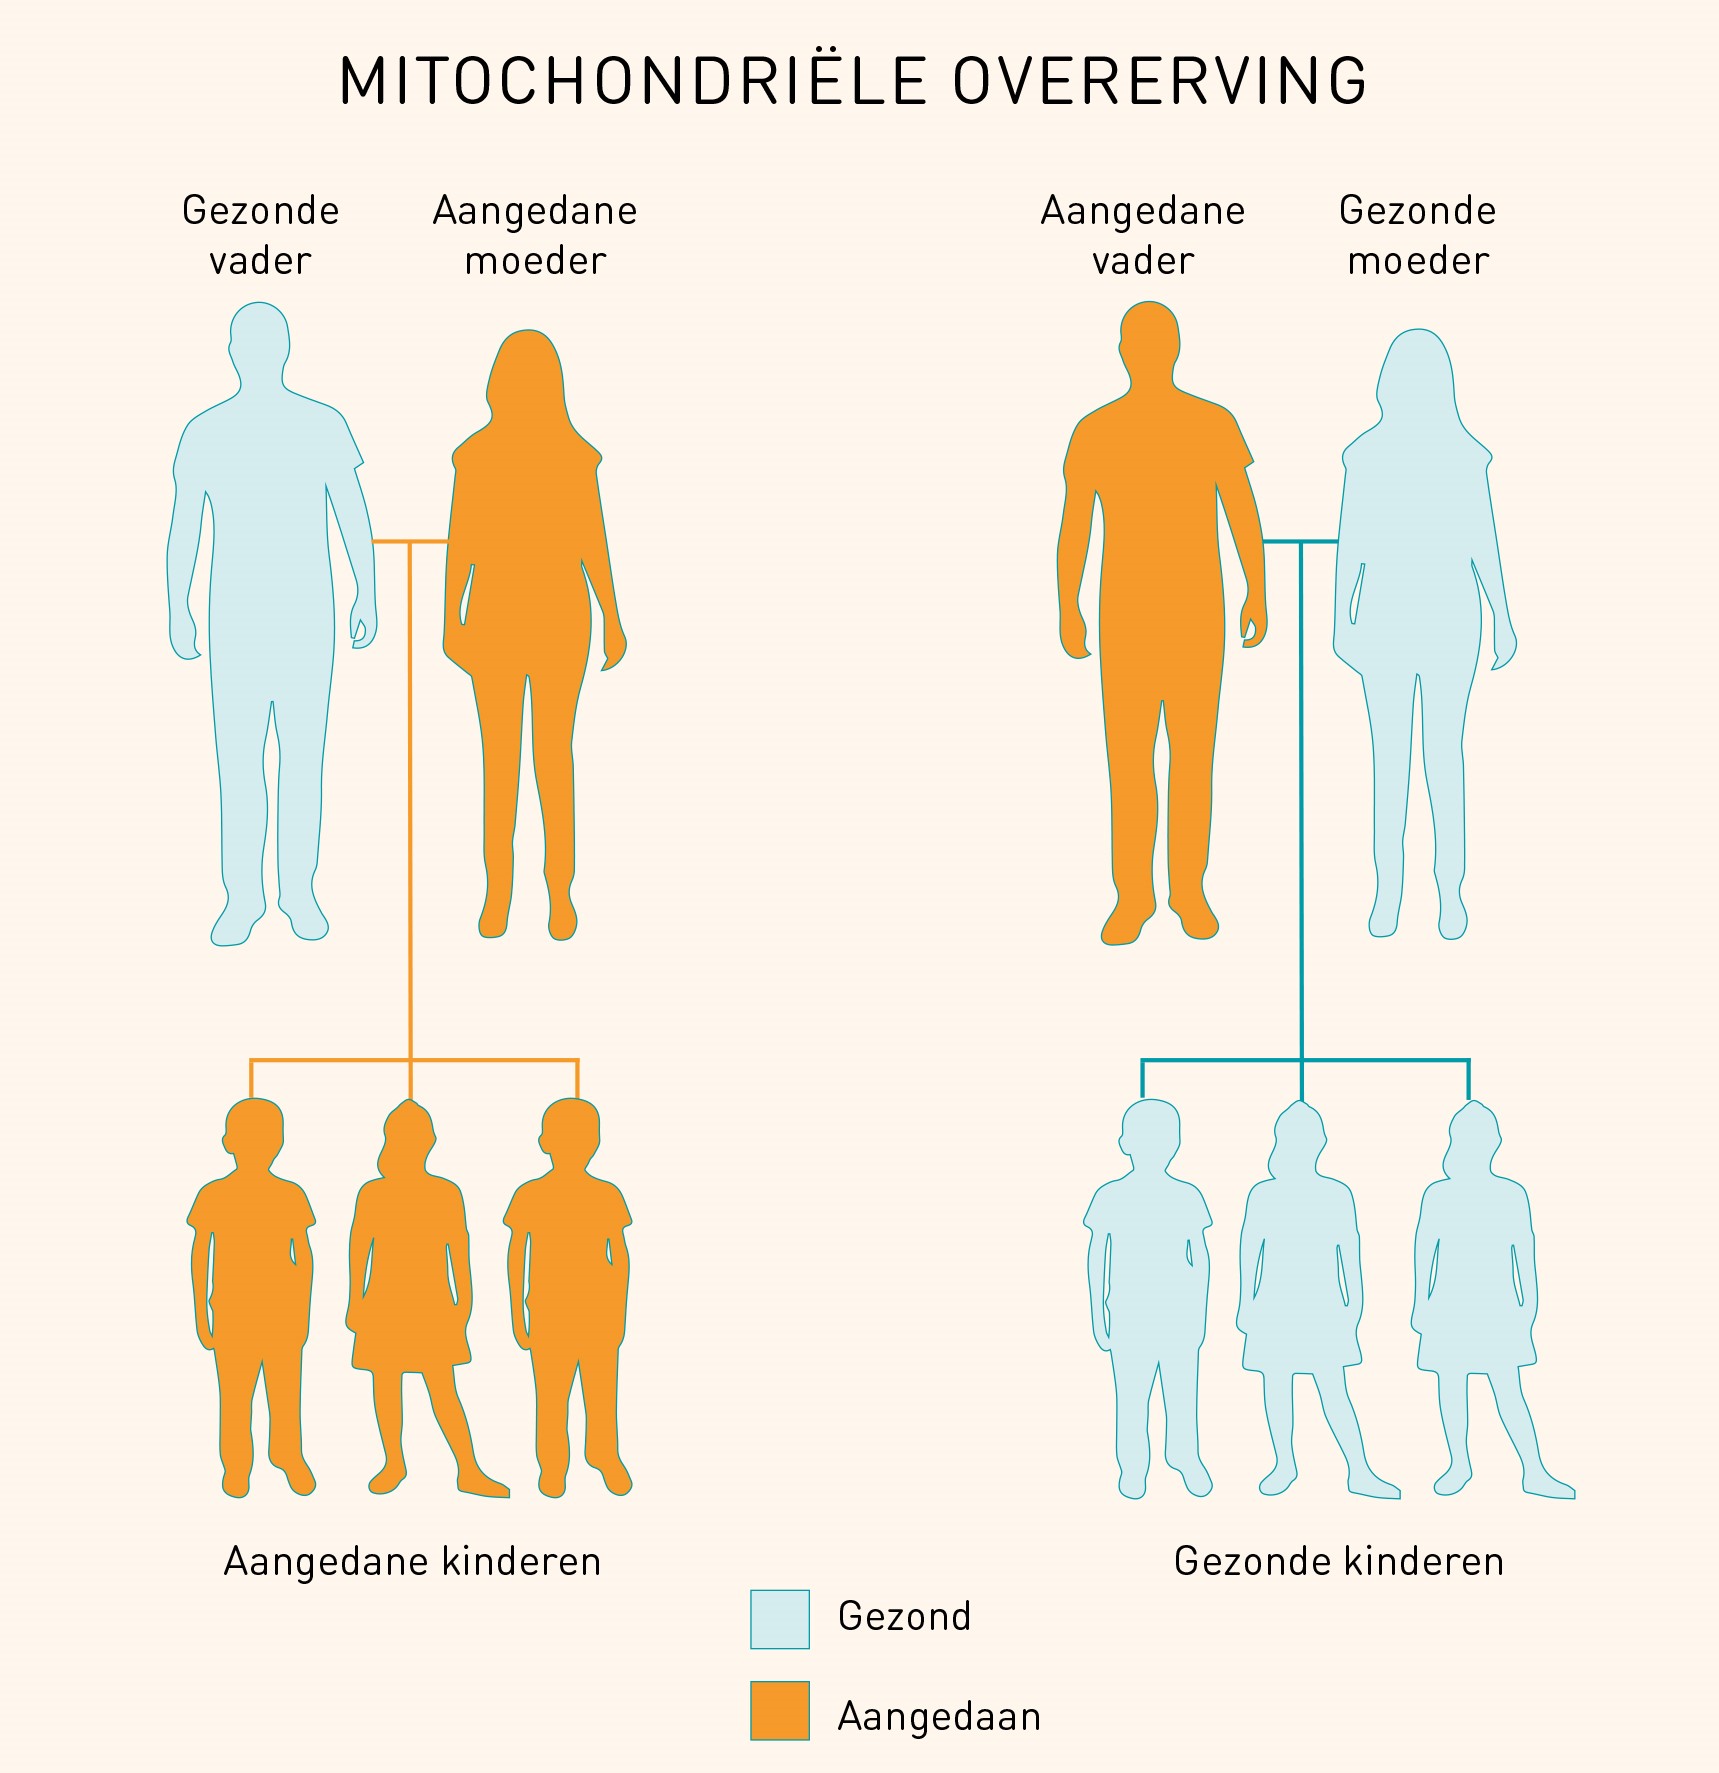 Mitochondriële overerving